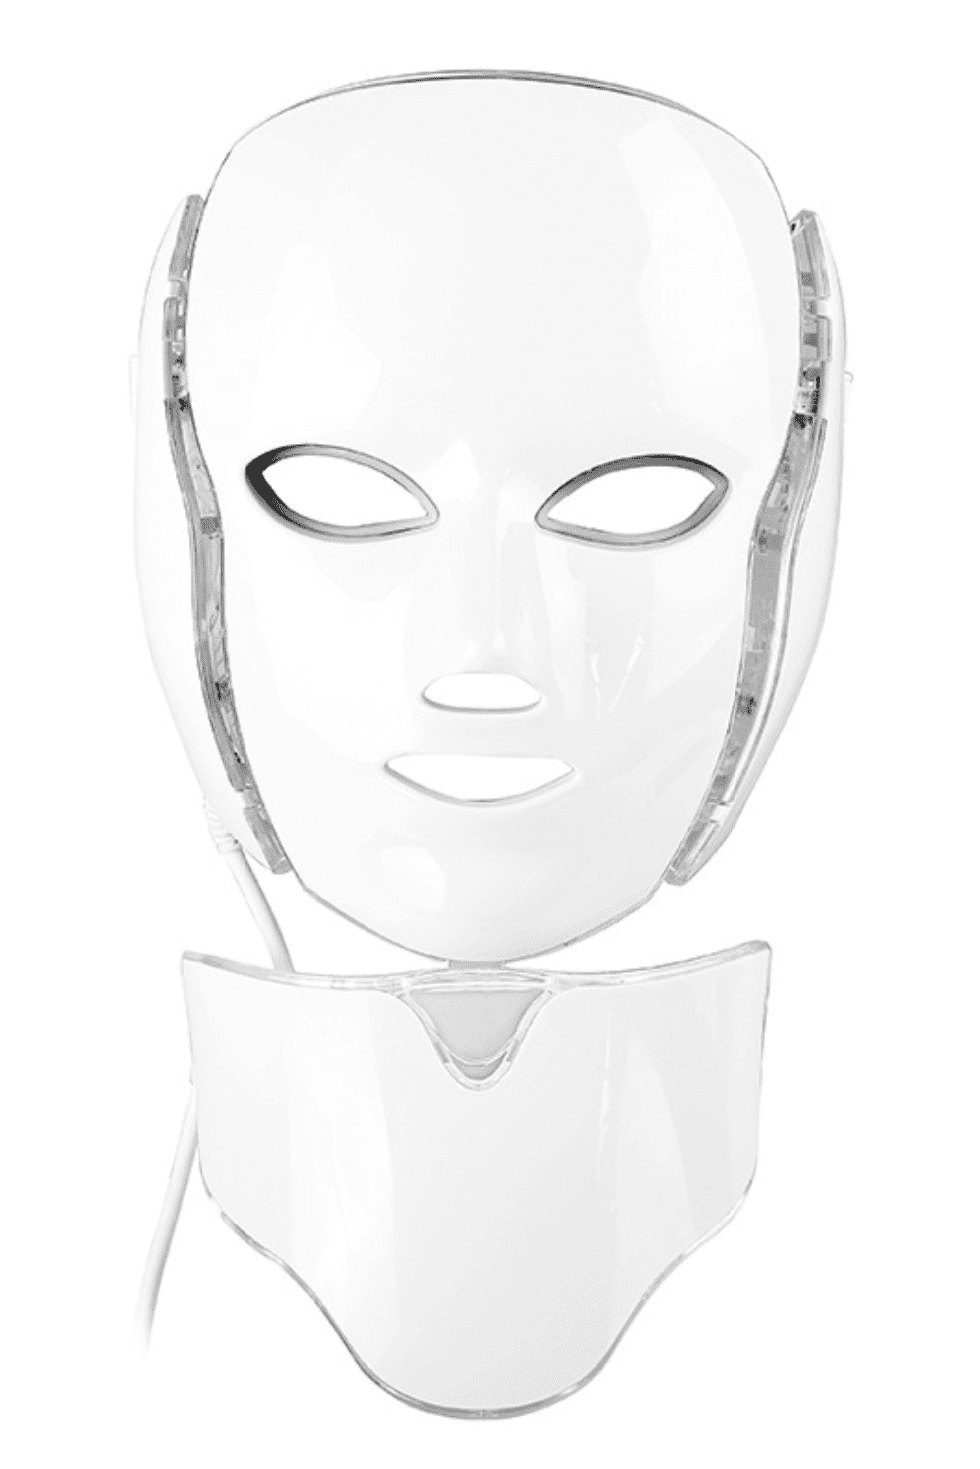 Professional LED Mask with Neck